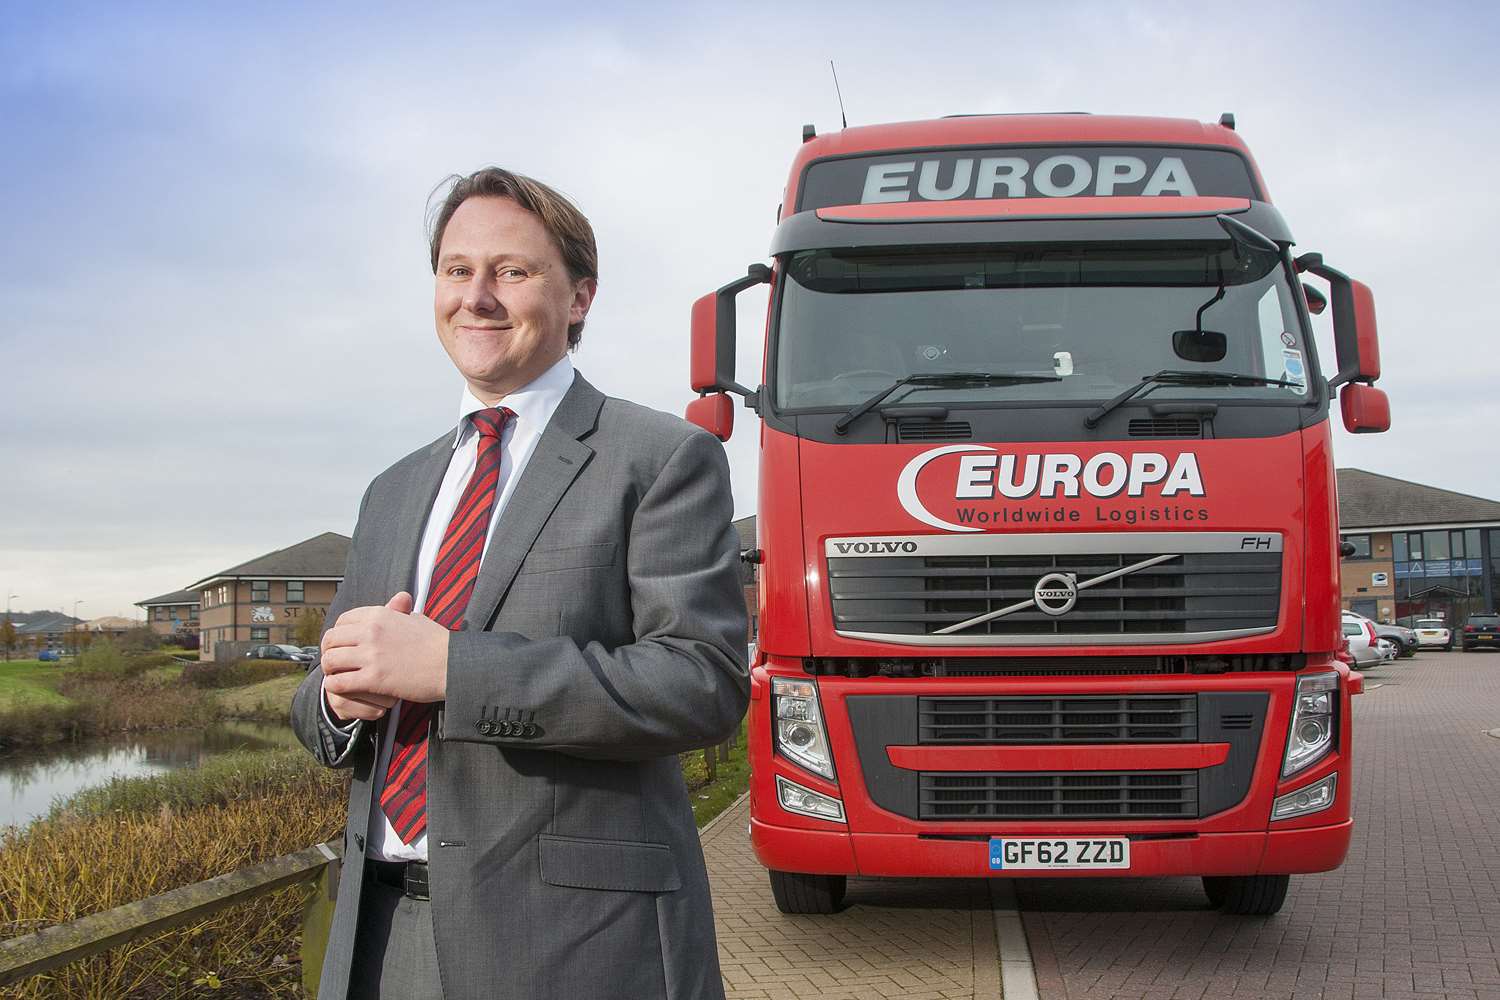 Andrew Baxter, MD of Europa Worldwide Logistics